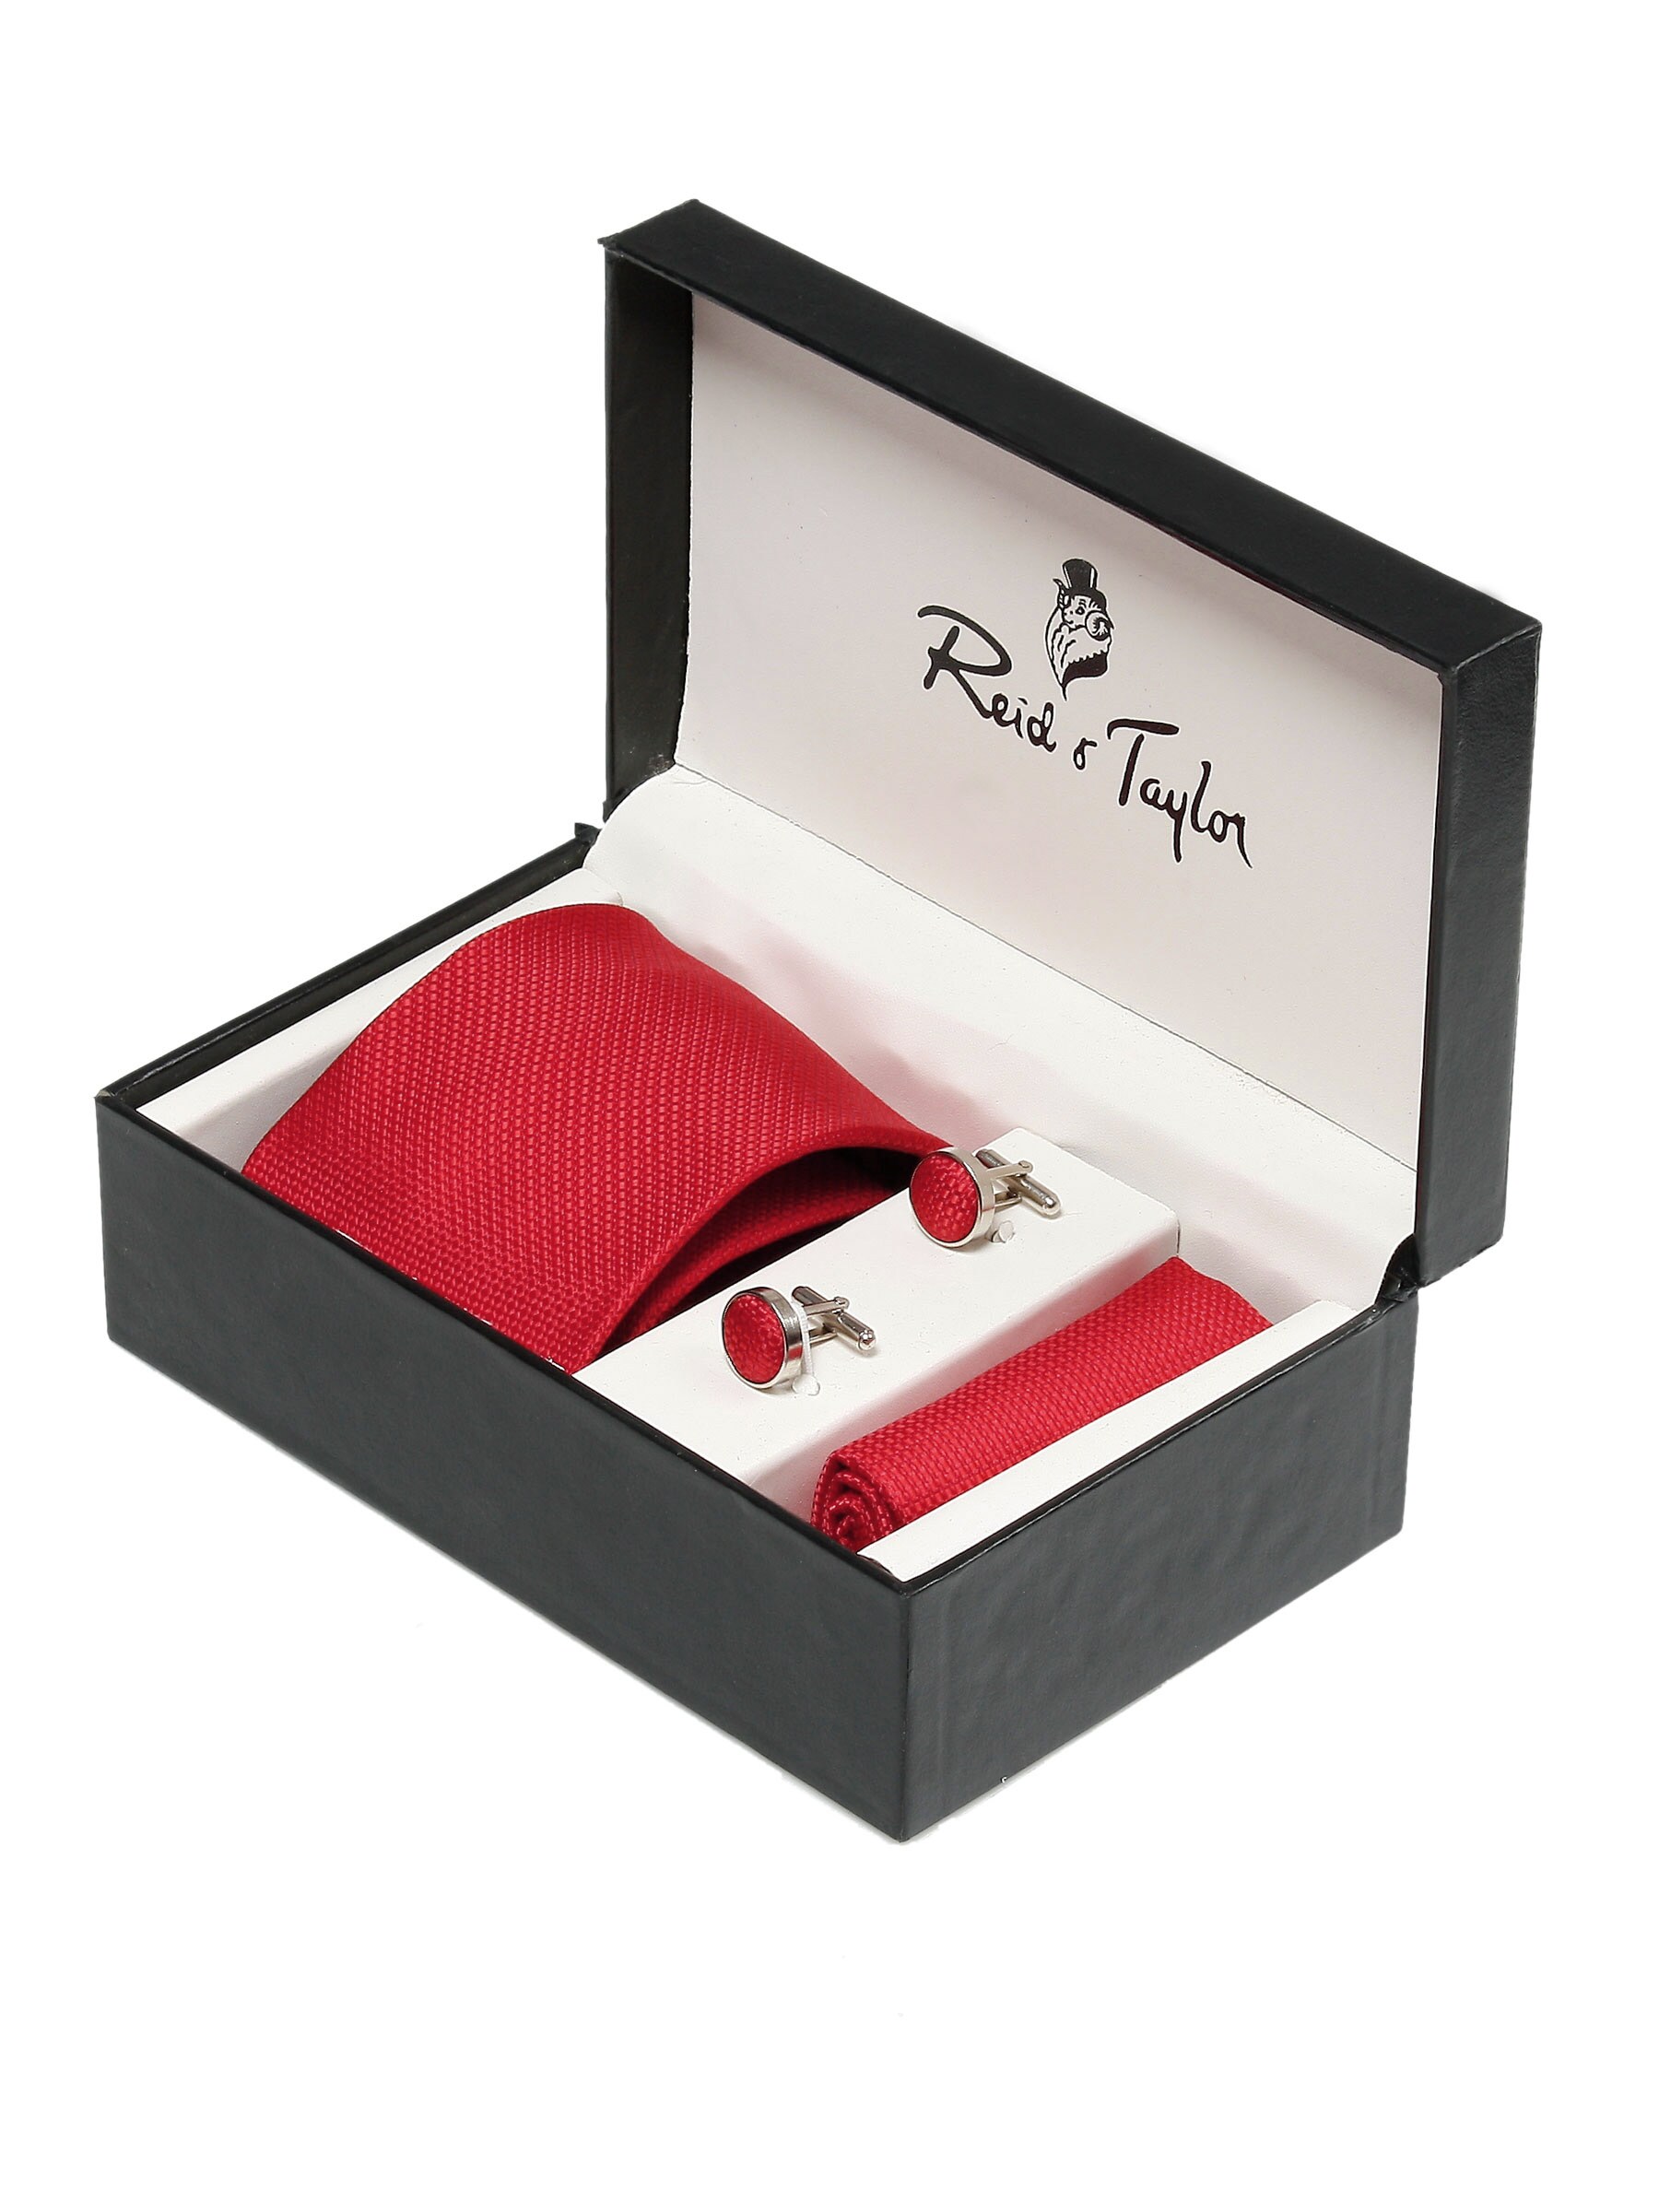 Reid & Taylor Men Formal Red Tie+Cufflink+Pocket square - Combo Pack